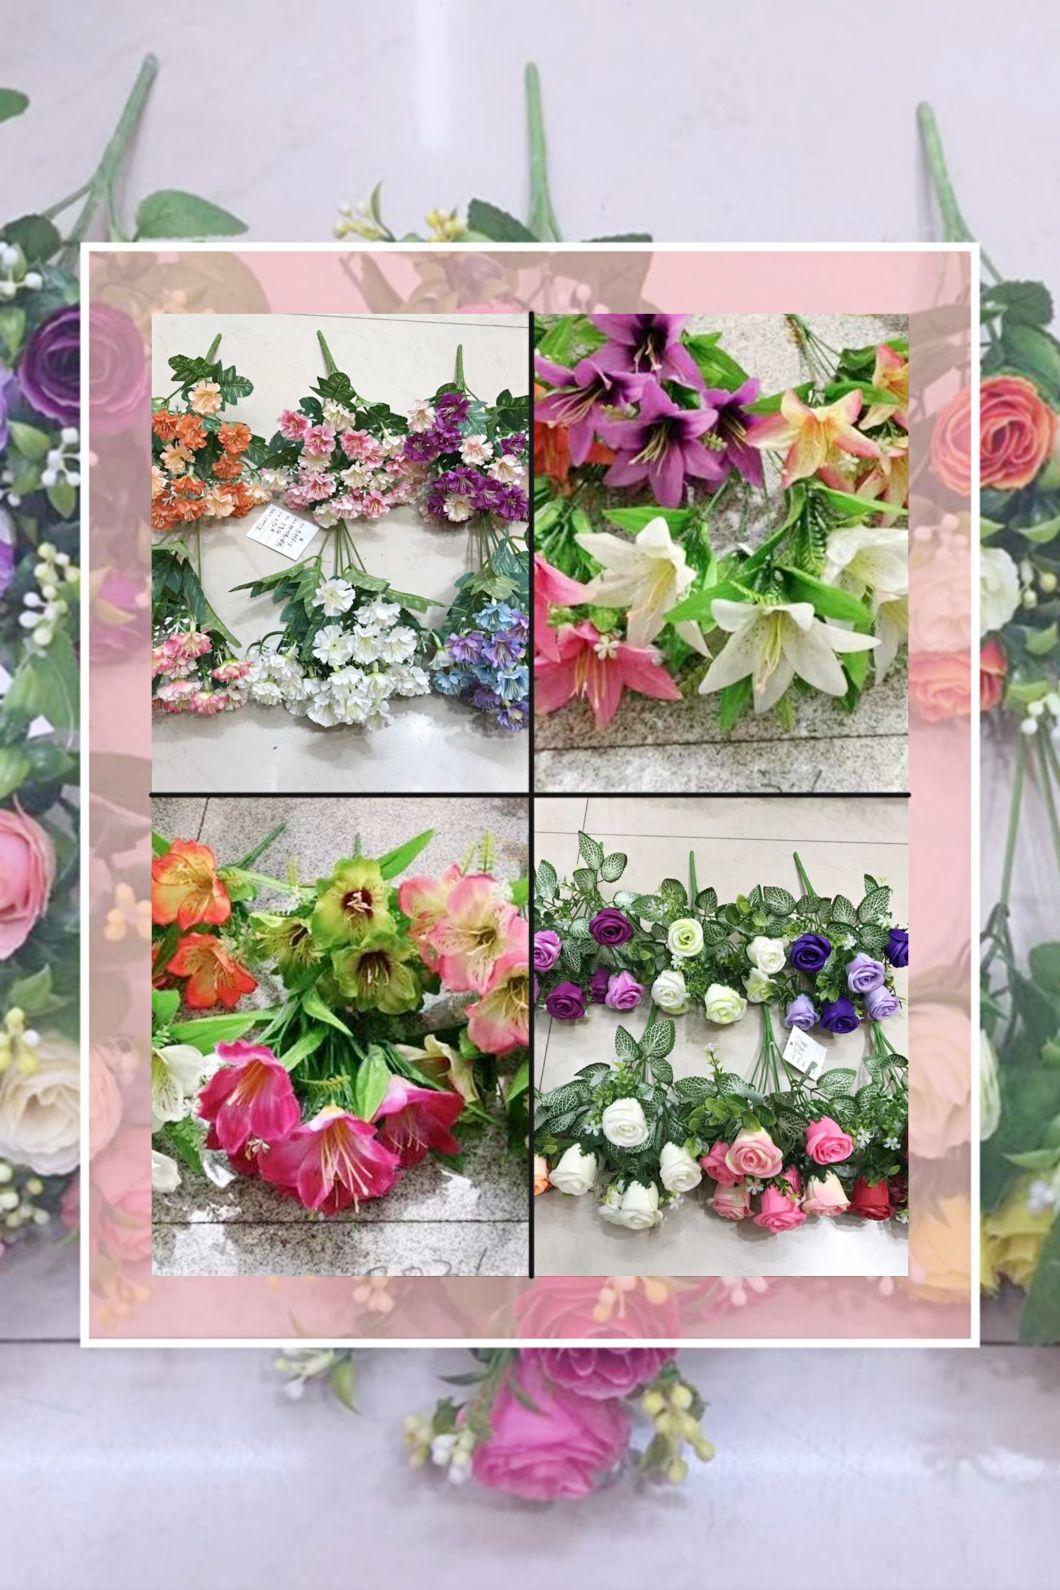 Artificial Roses Flowers for Home Garden Wedding Decor